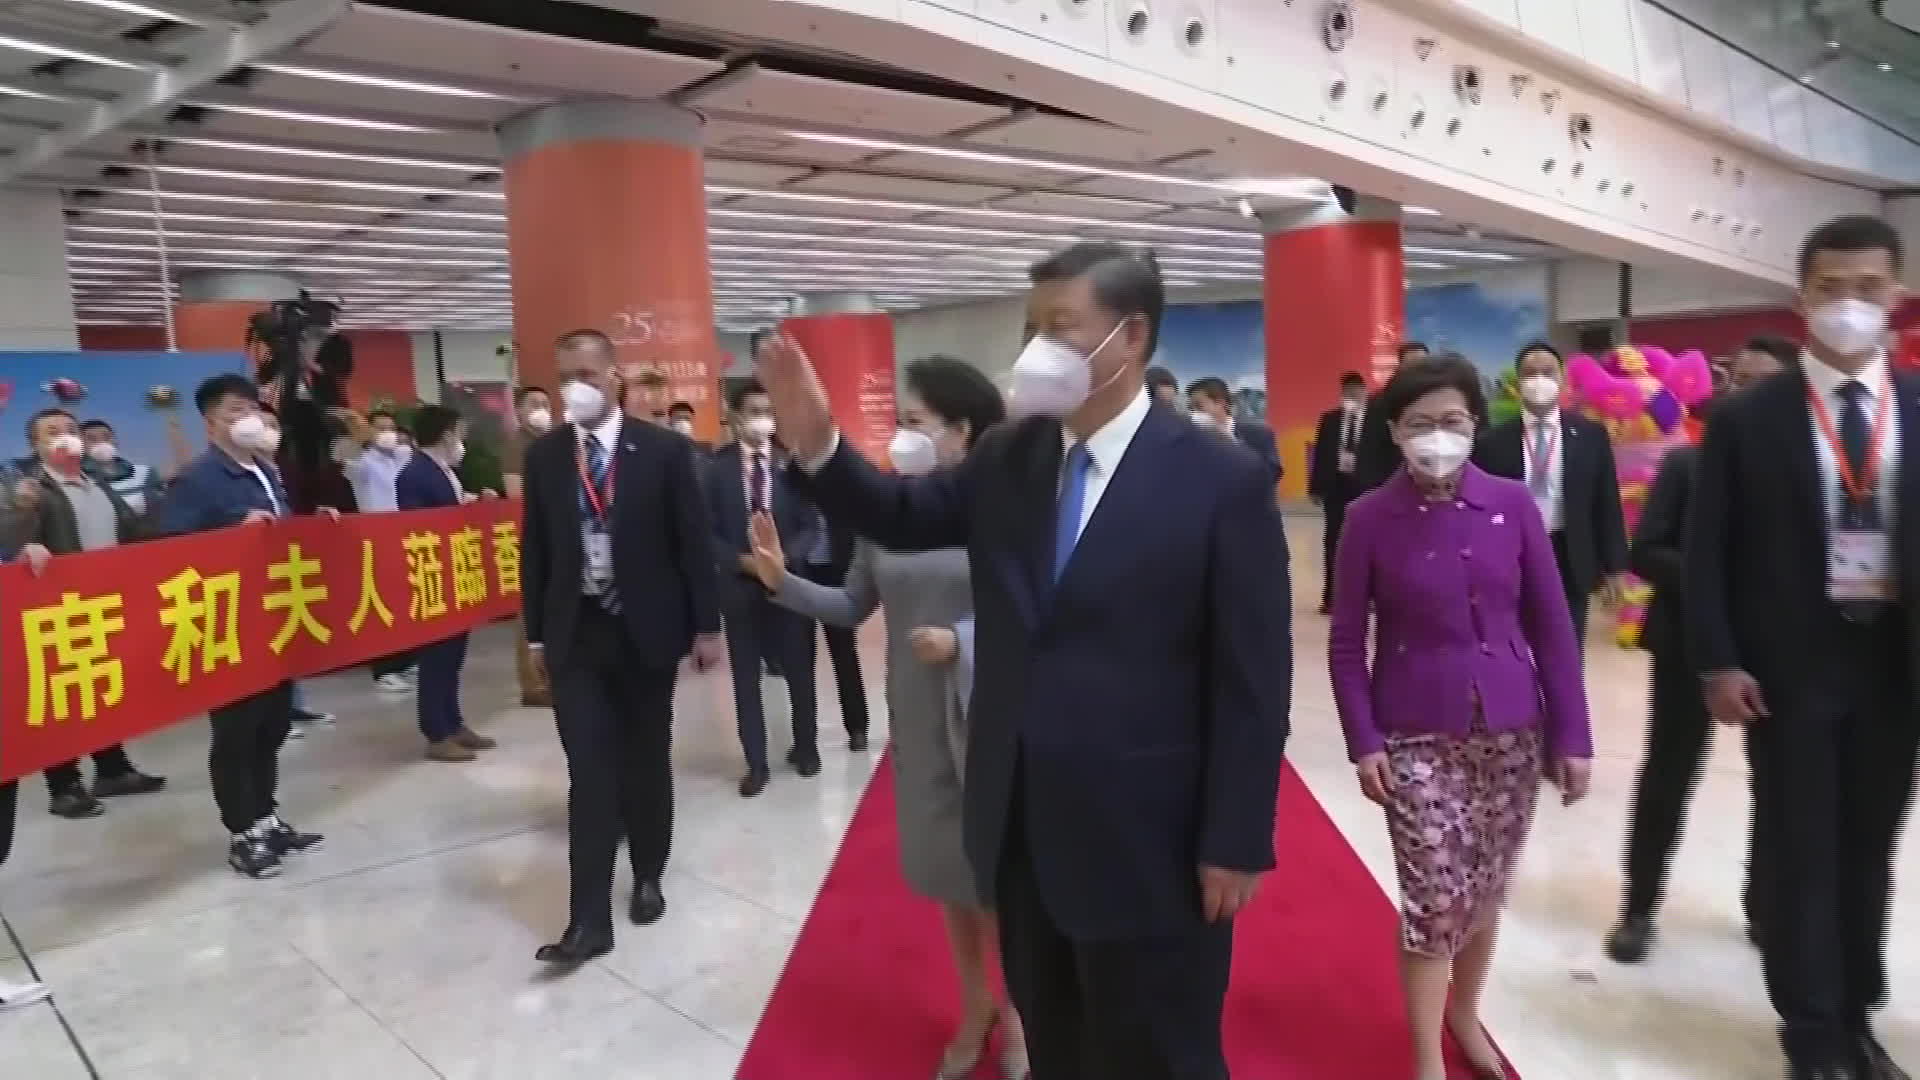 Chinese President Xi Jinping Arrives in Hong Kong